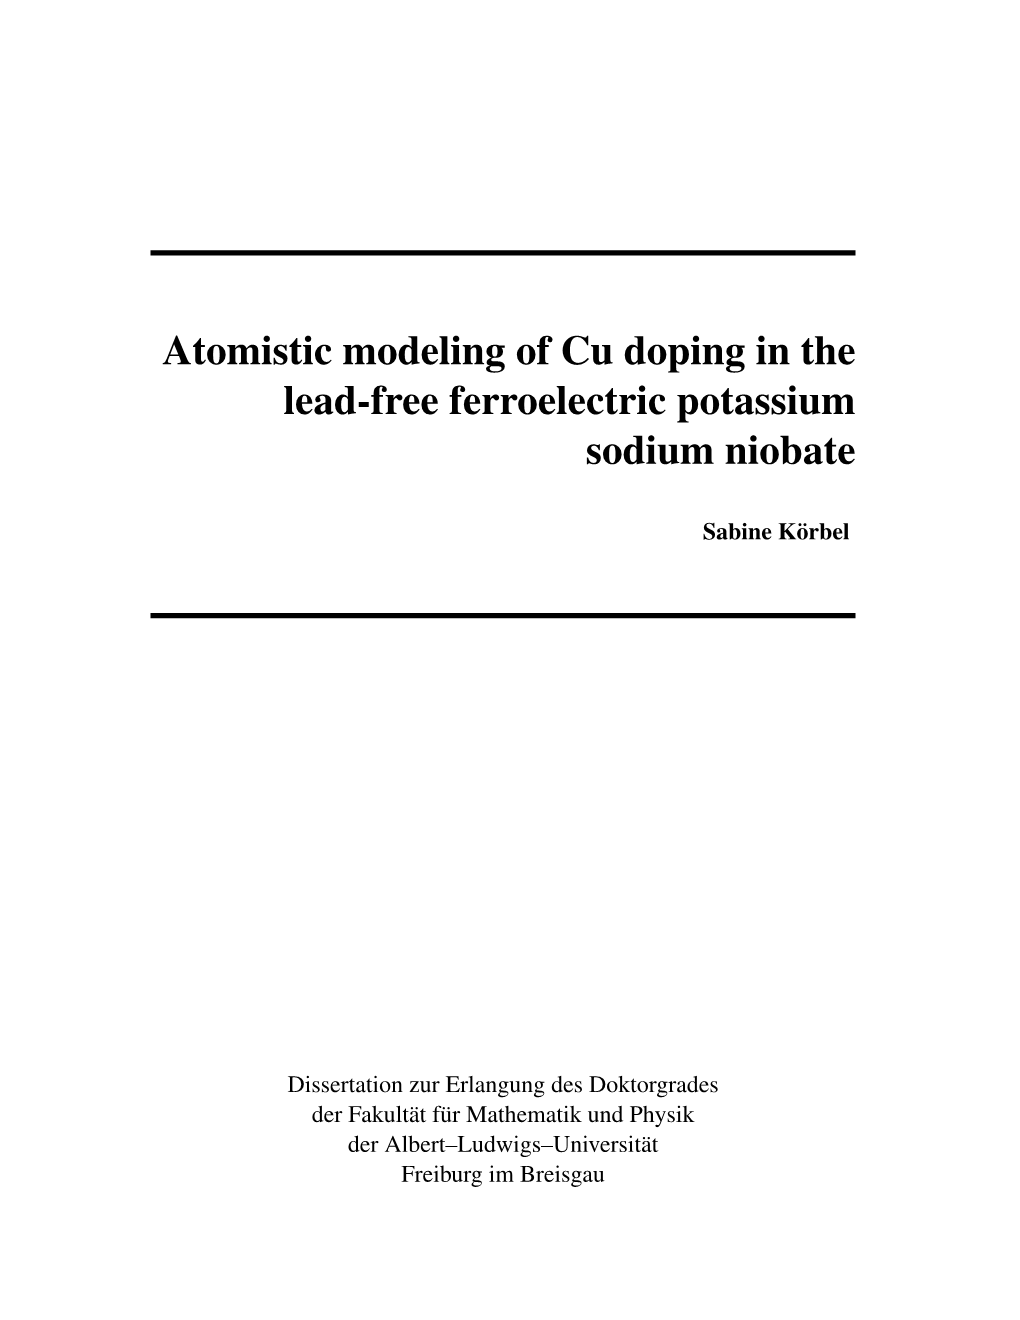 Atomistic Modeling of Cu Doping in the Lead-Free Ferroelectric Potassium Sodium Niobate